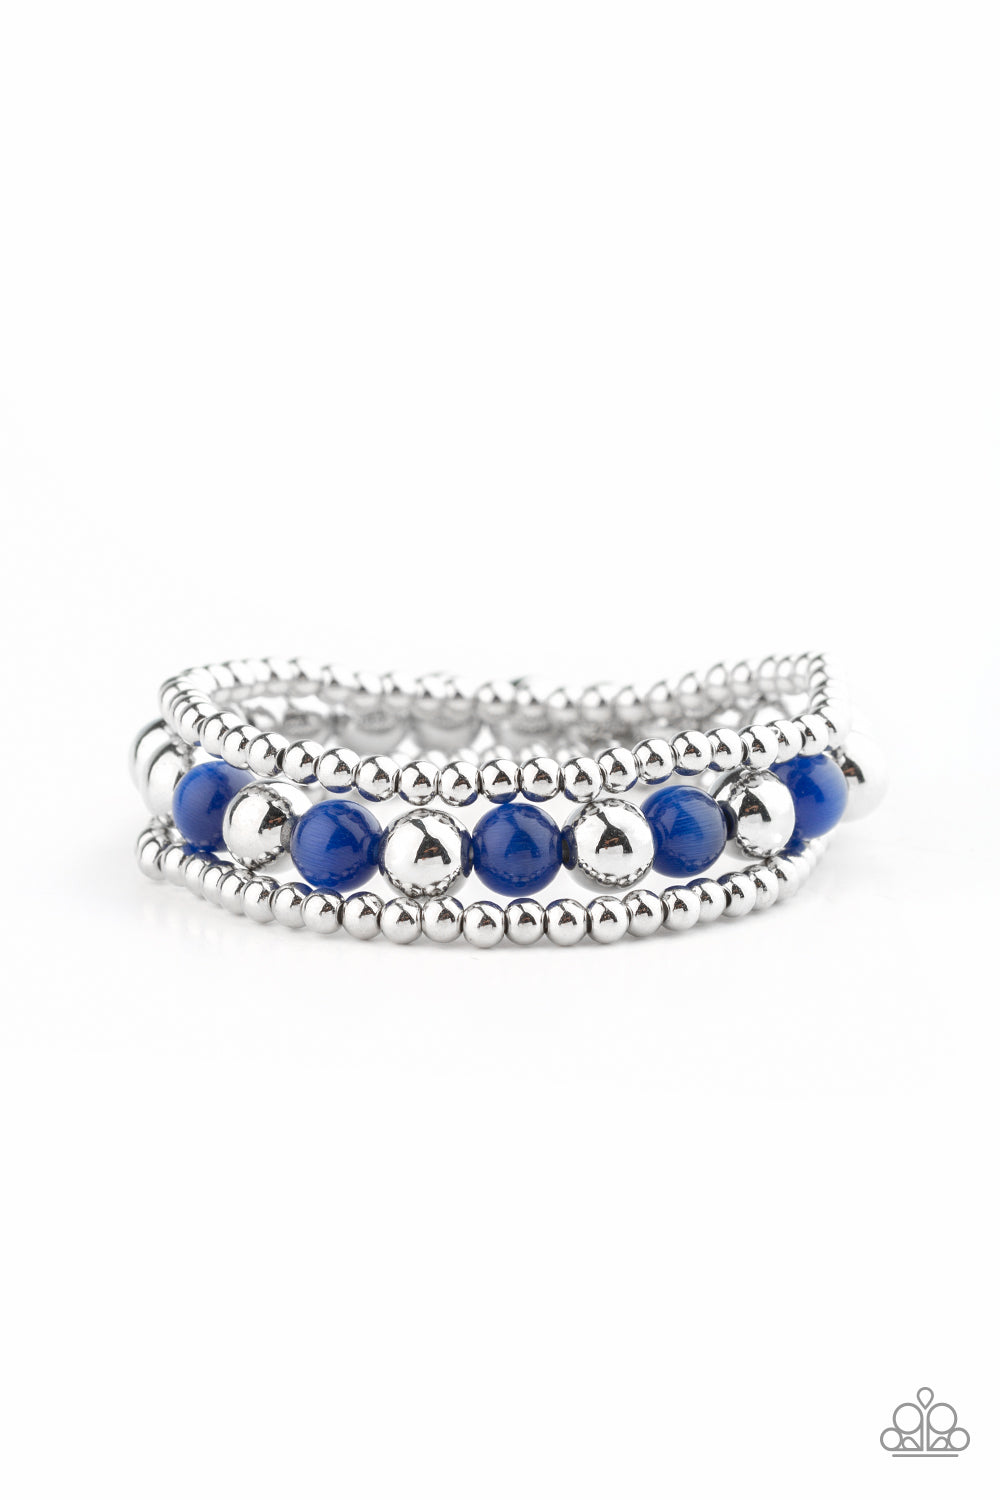 Go With The GLOW - Blue moonstone bracelet